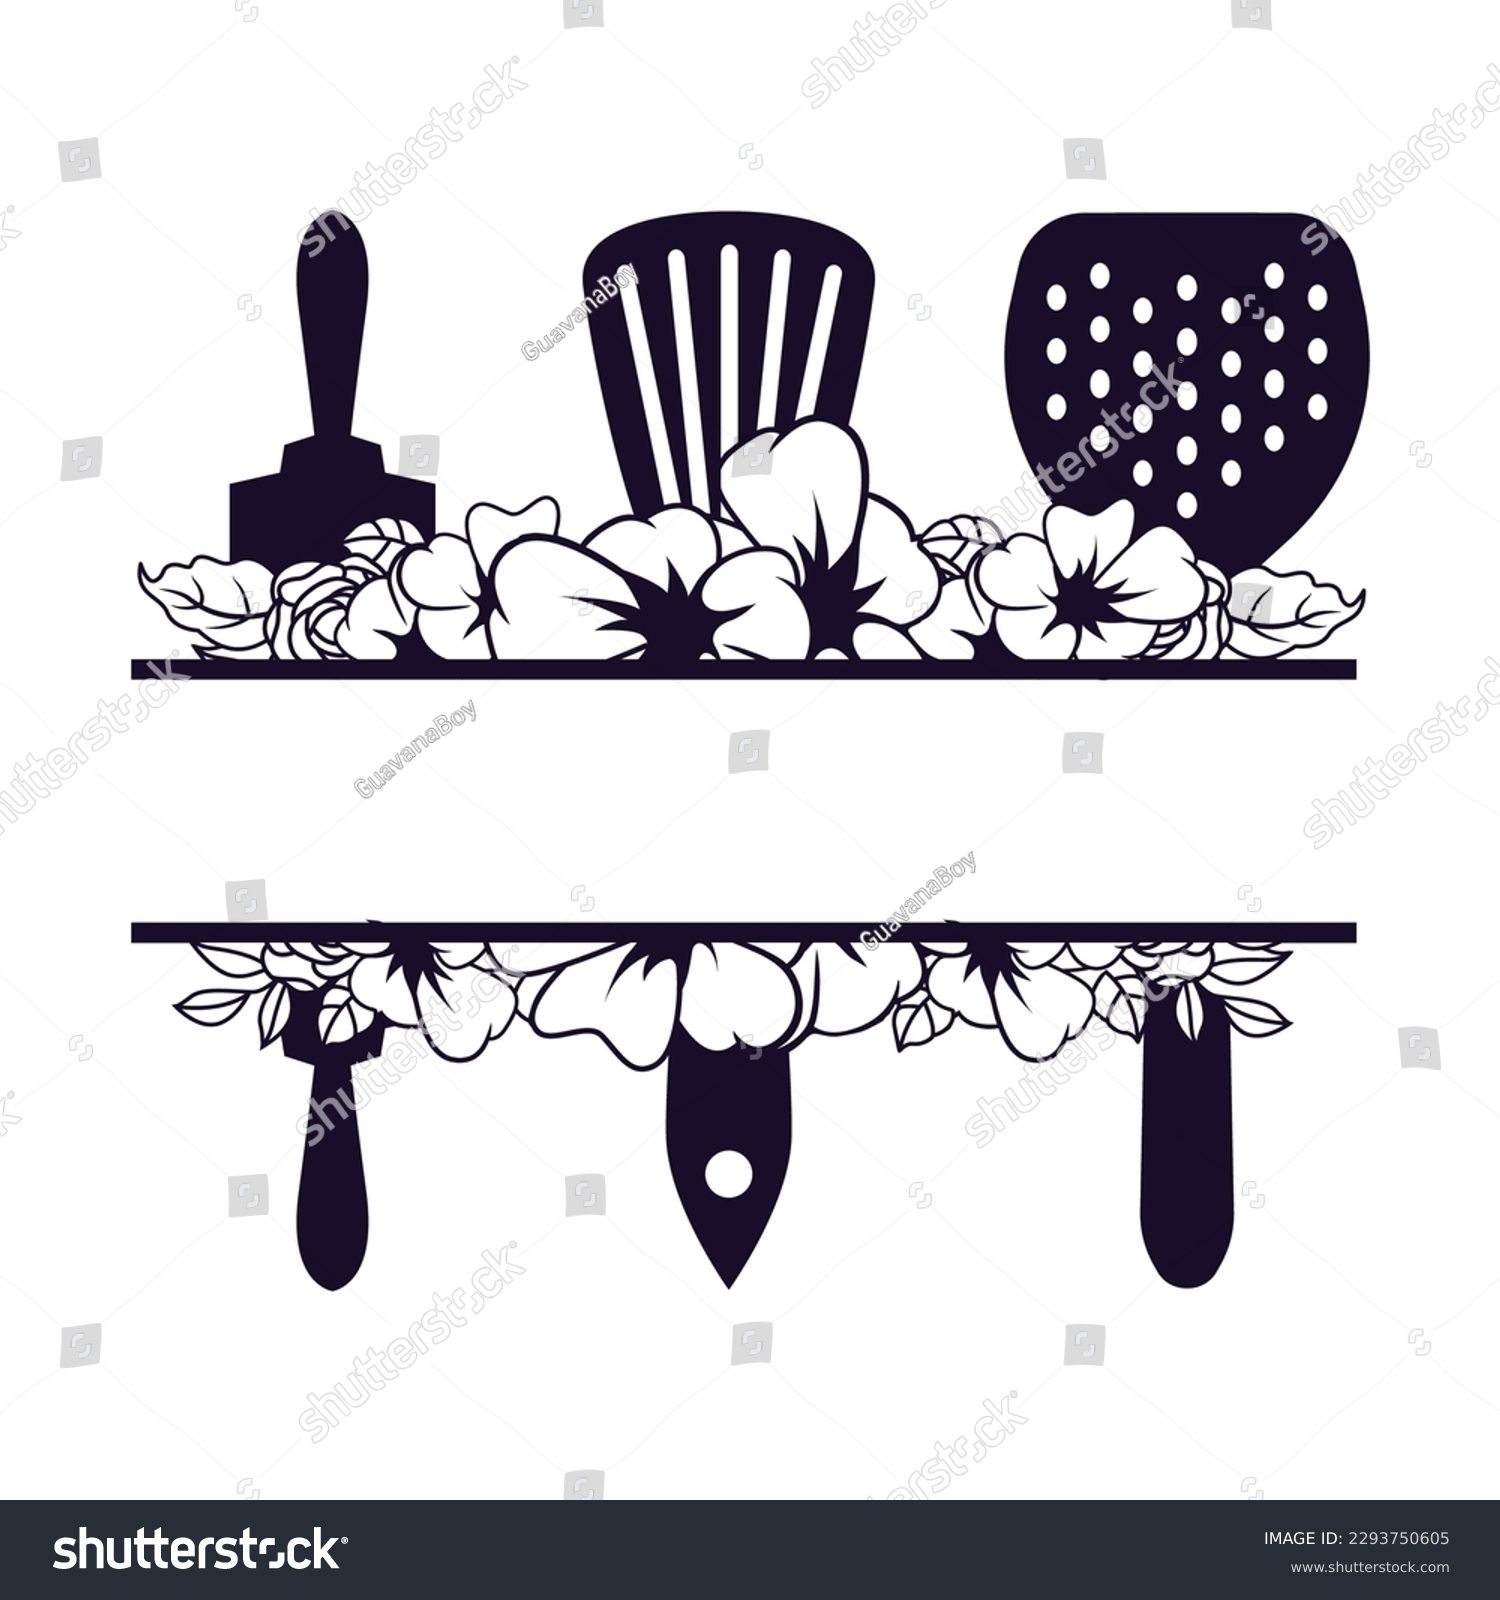 SVG of Retro kitchen utensil tools logo design. Kitchen tools clipart SVG. Vector illustration svg